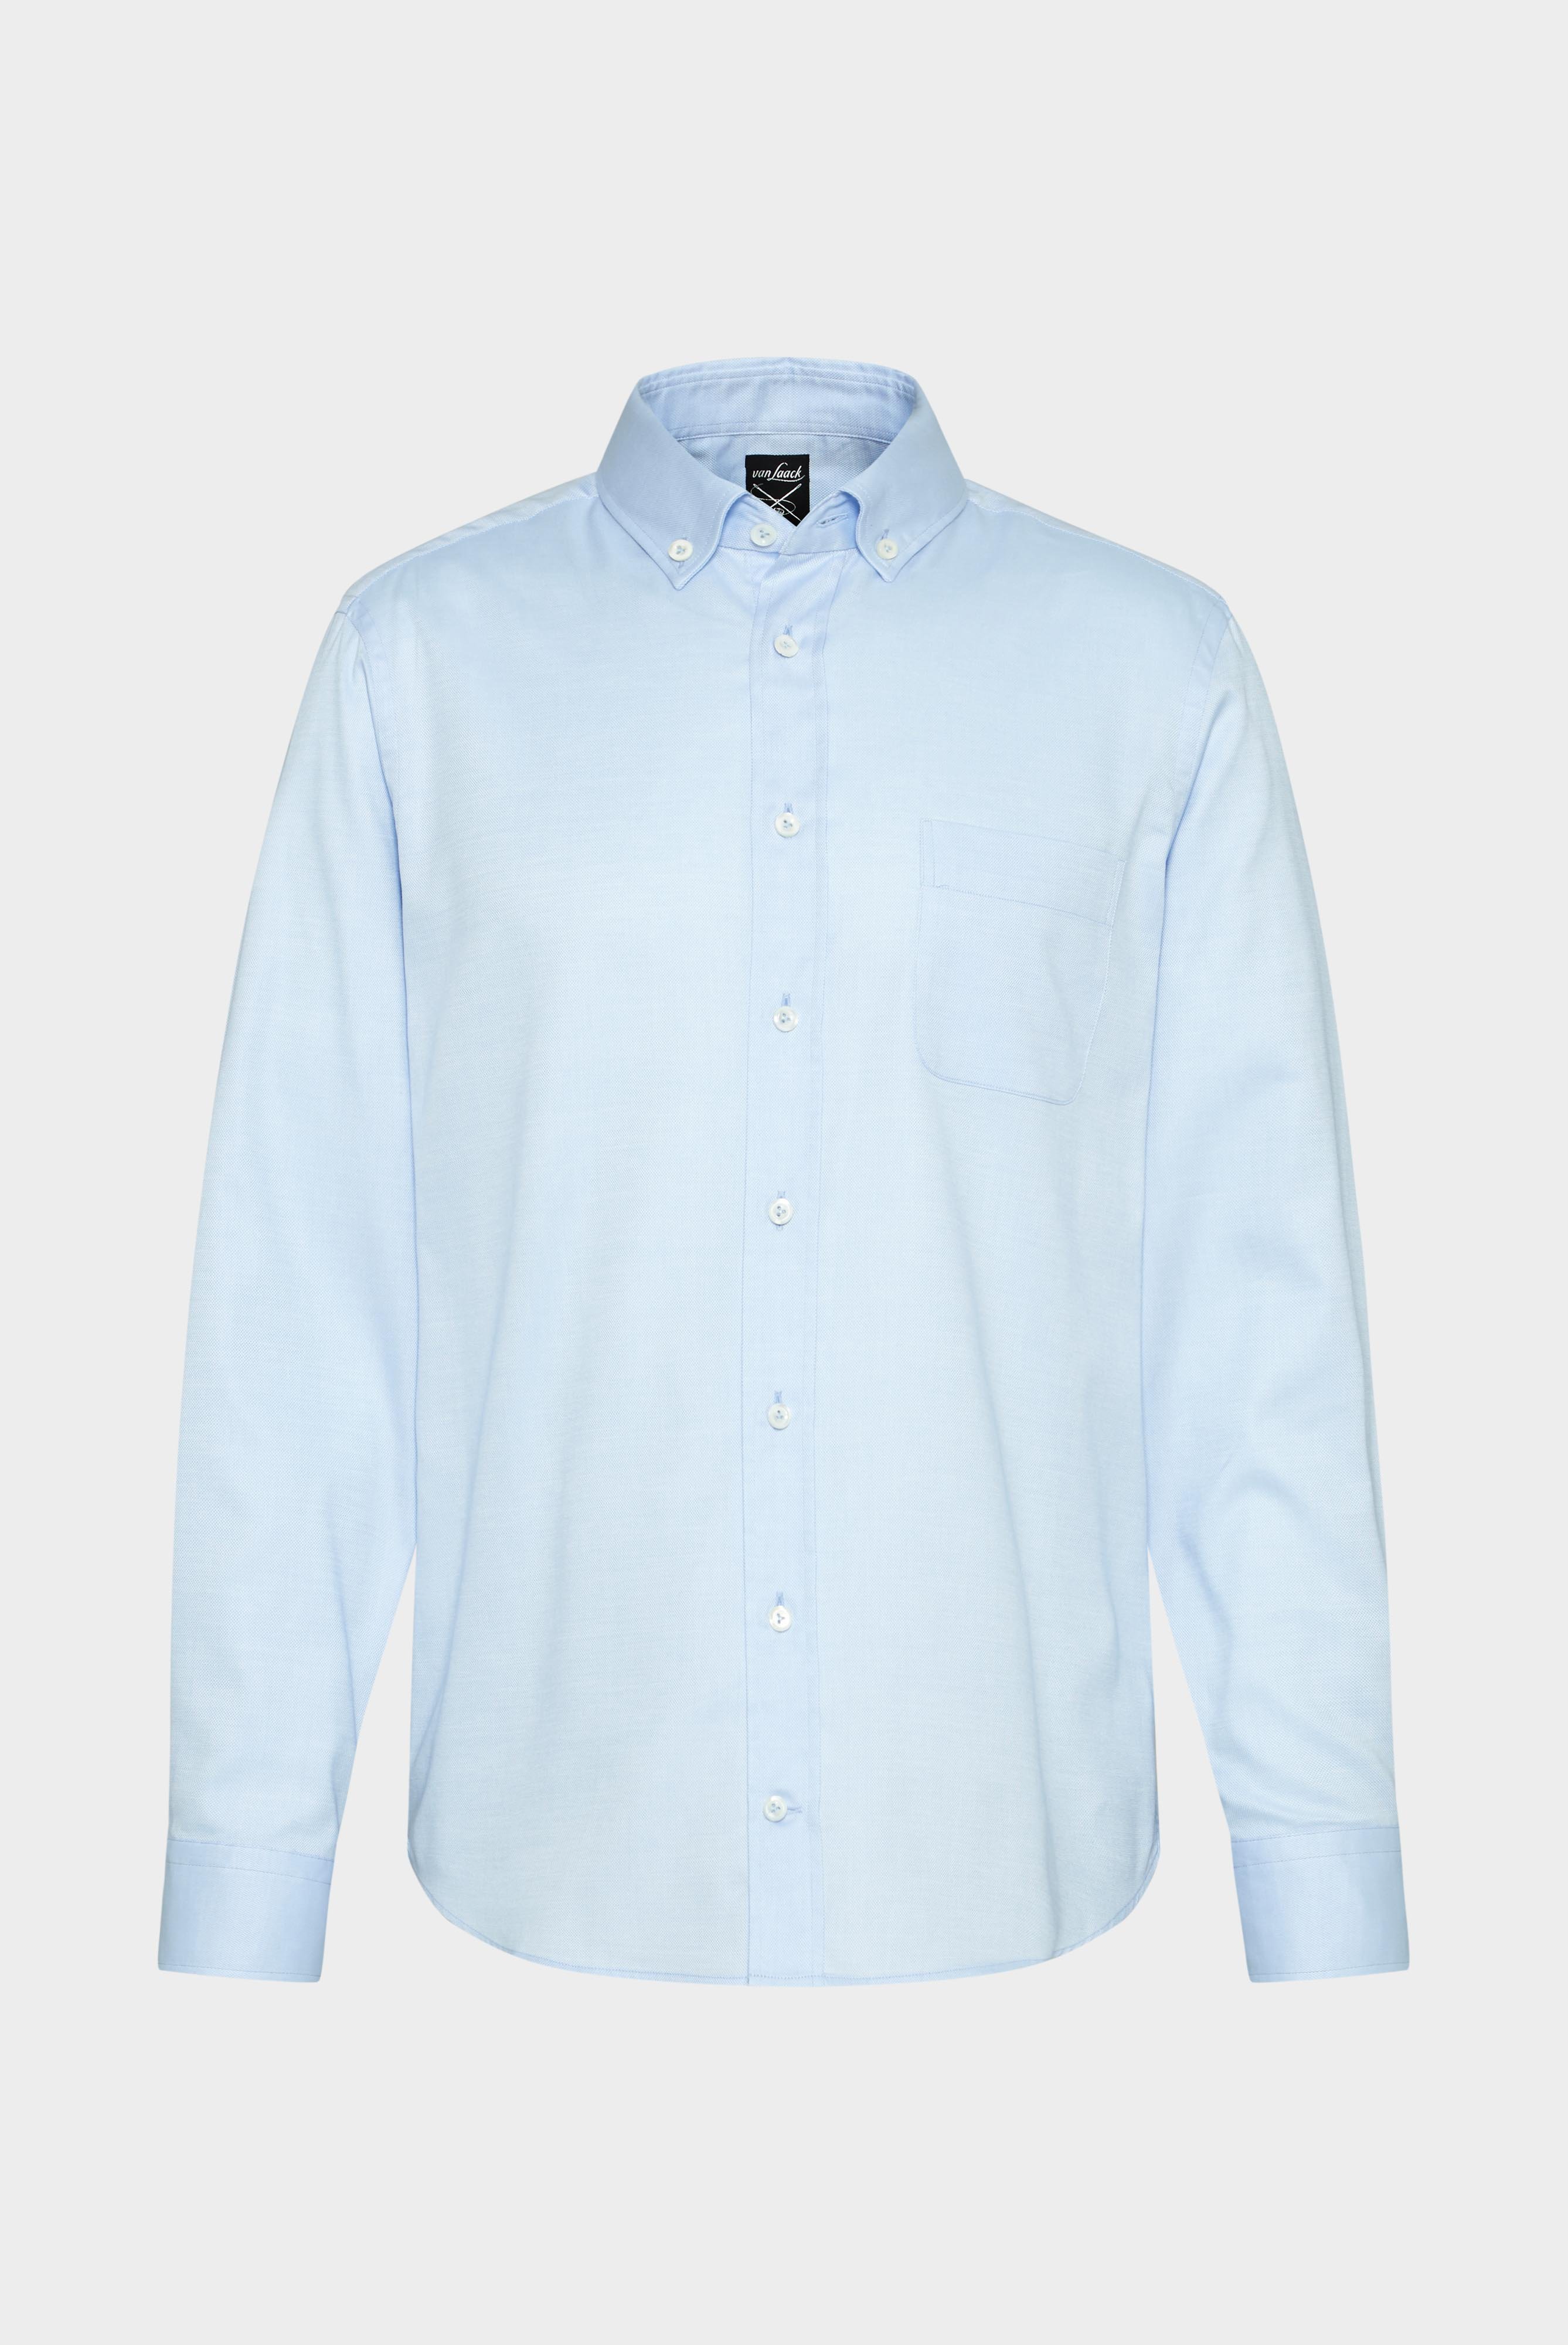 Casual Shirts+Structured Plain Shirt+20.2013.AV.130872.720.37